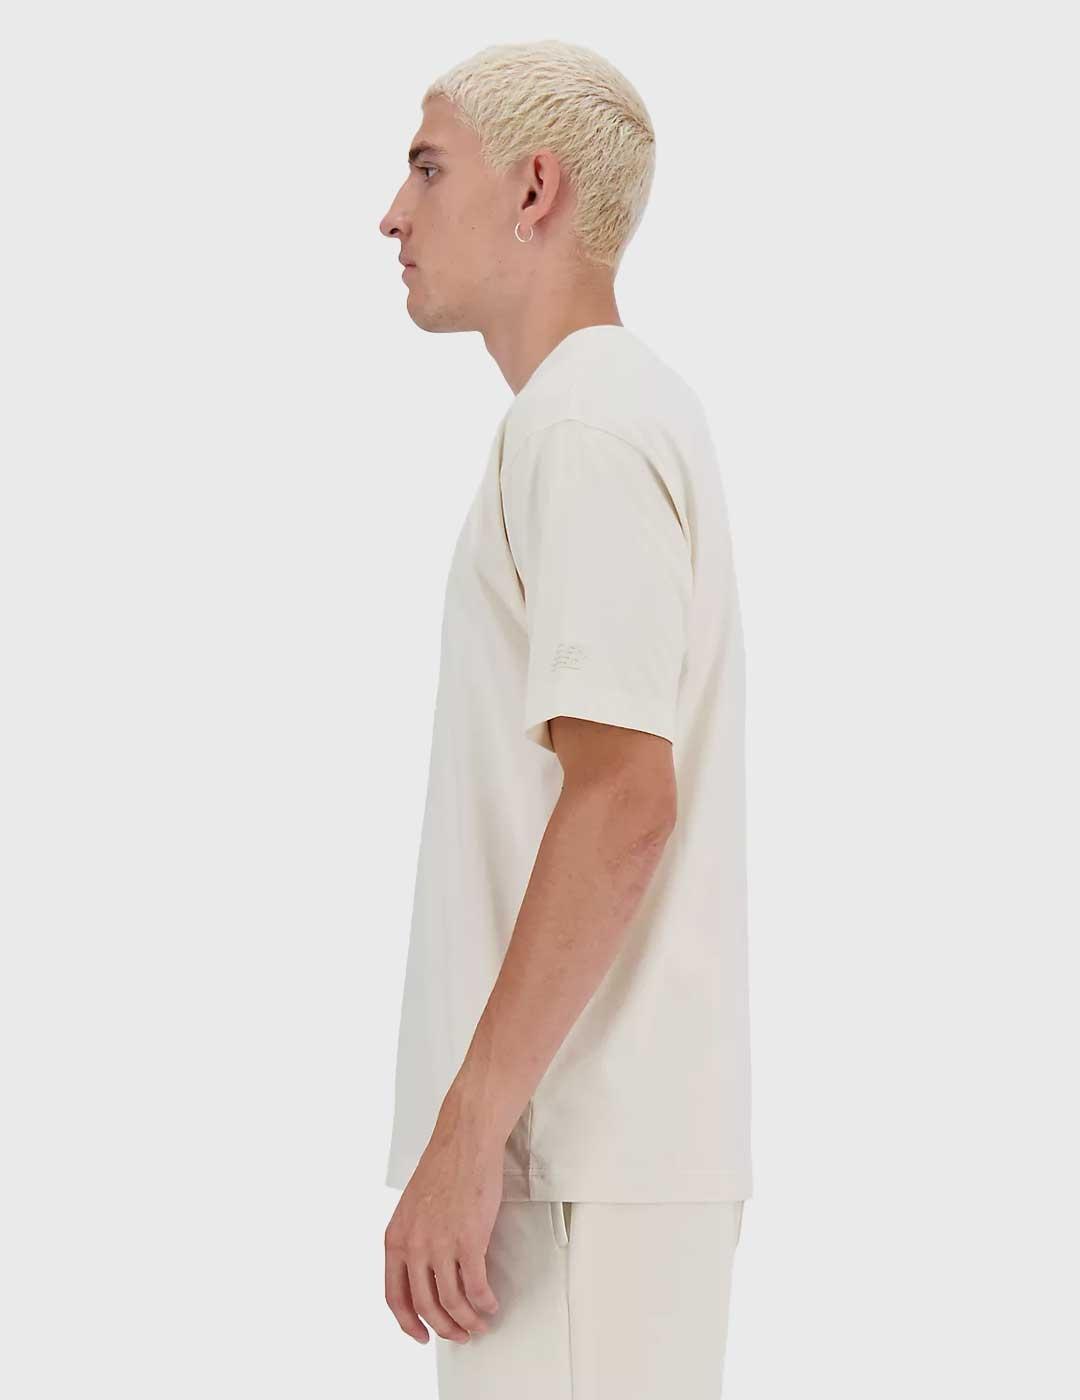 New Balance Hyper Density Graphic Camiseta beige para hombre